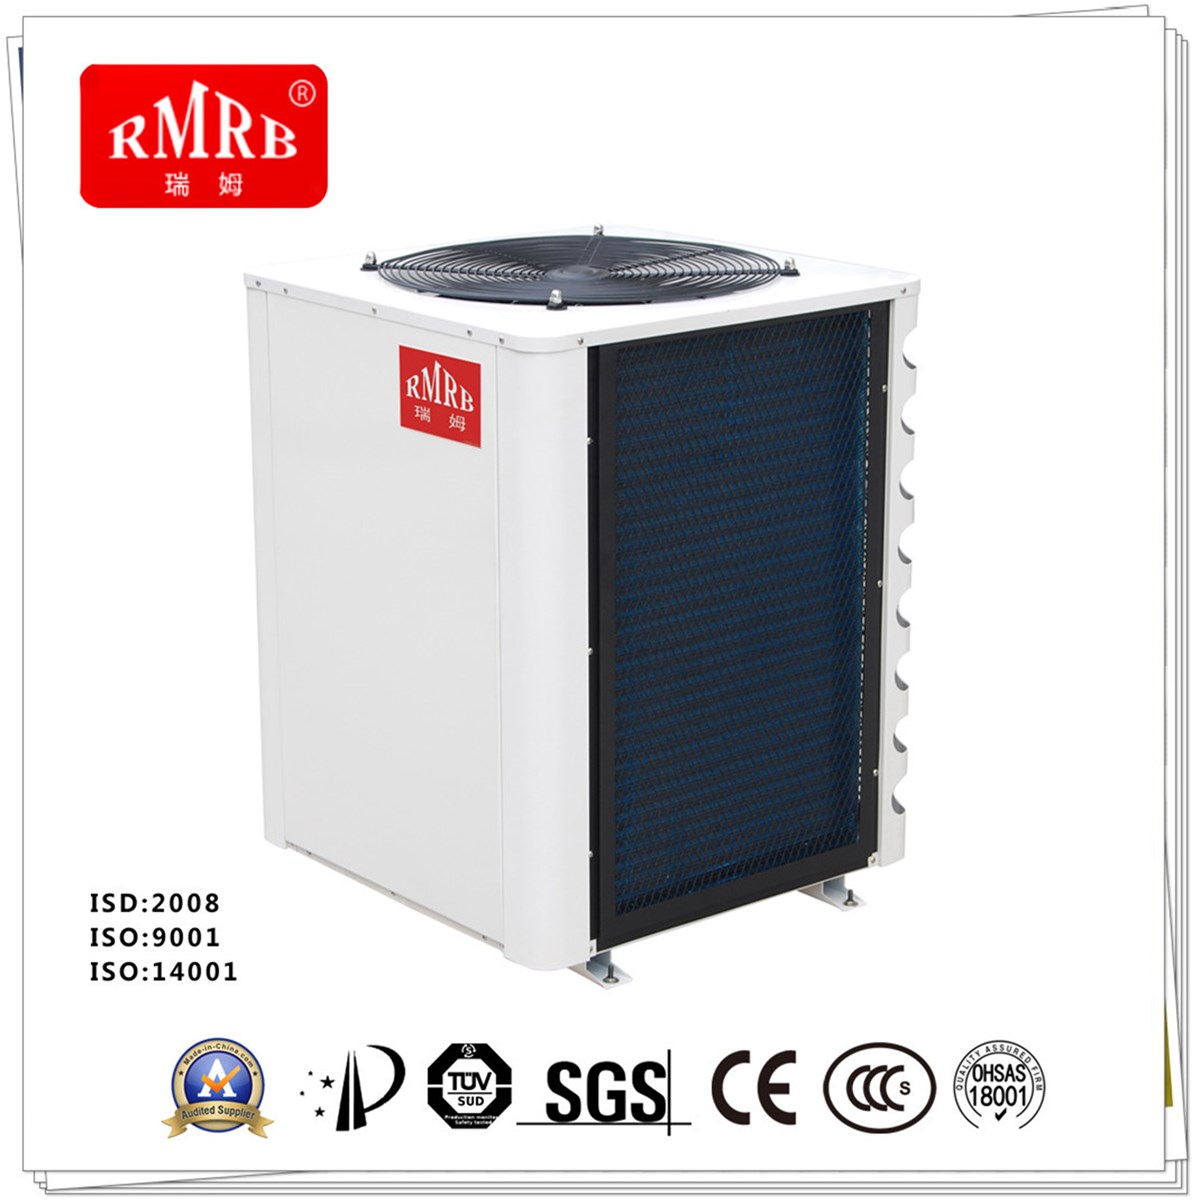 RMRB06SRD air source heat pump hot water units 22kw